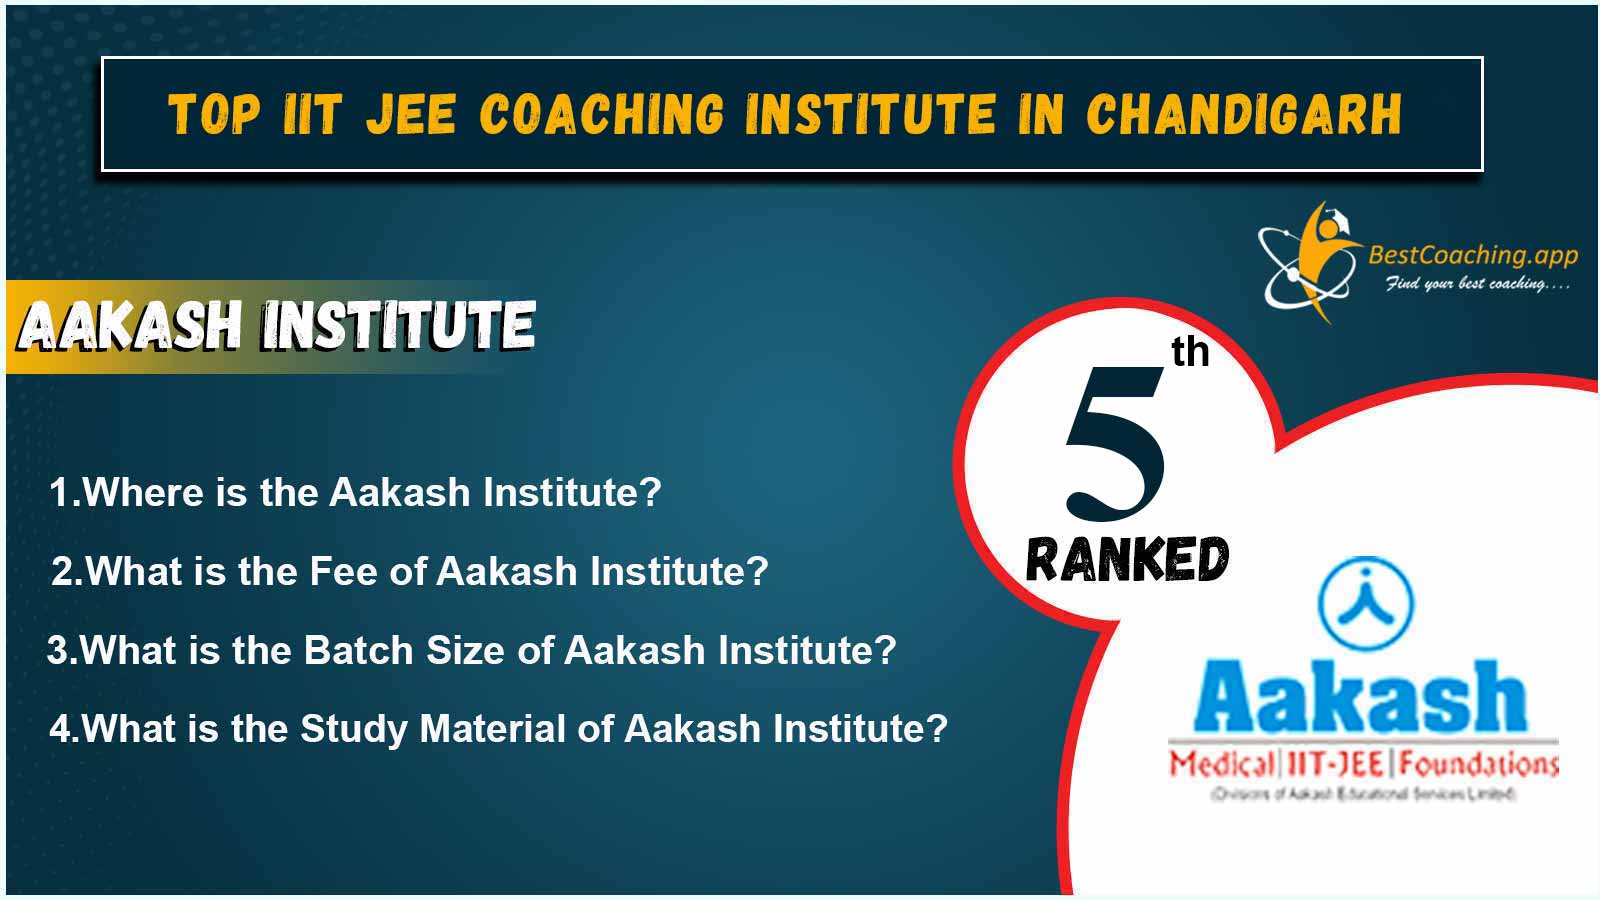 Top IIT JEE Coaching Centers In Chandigarh